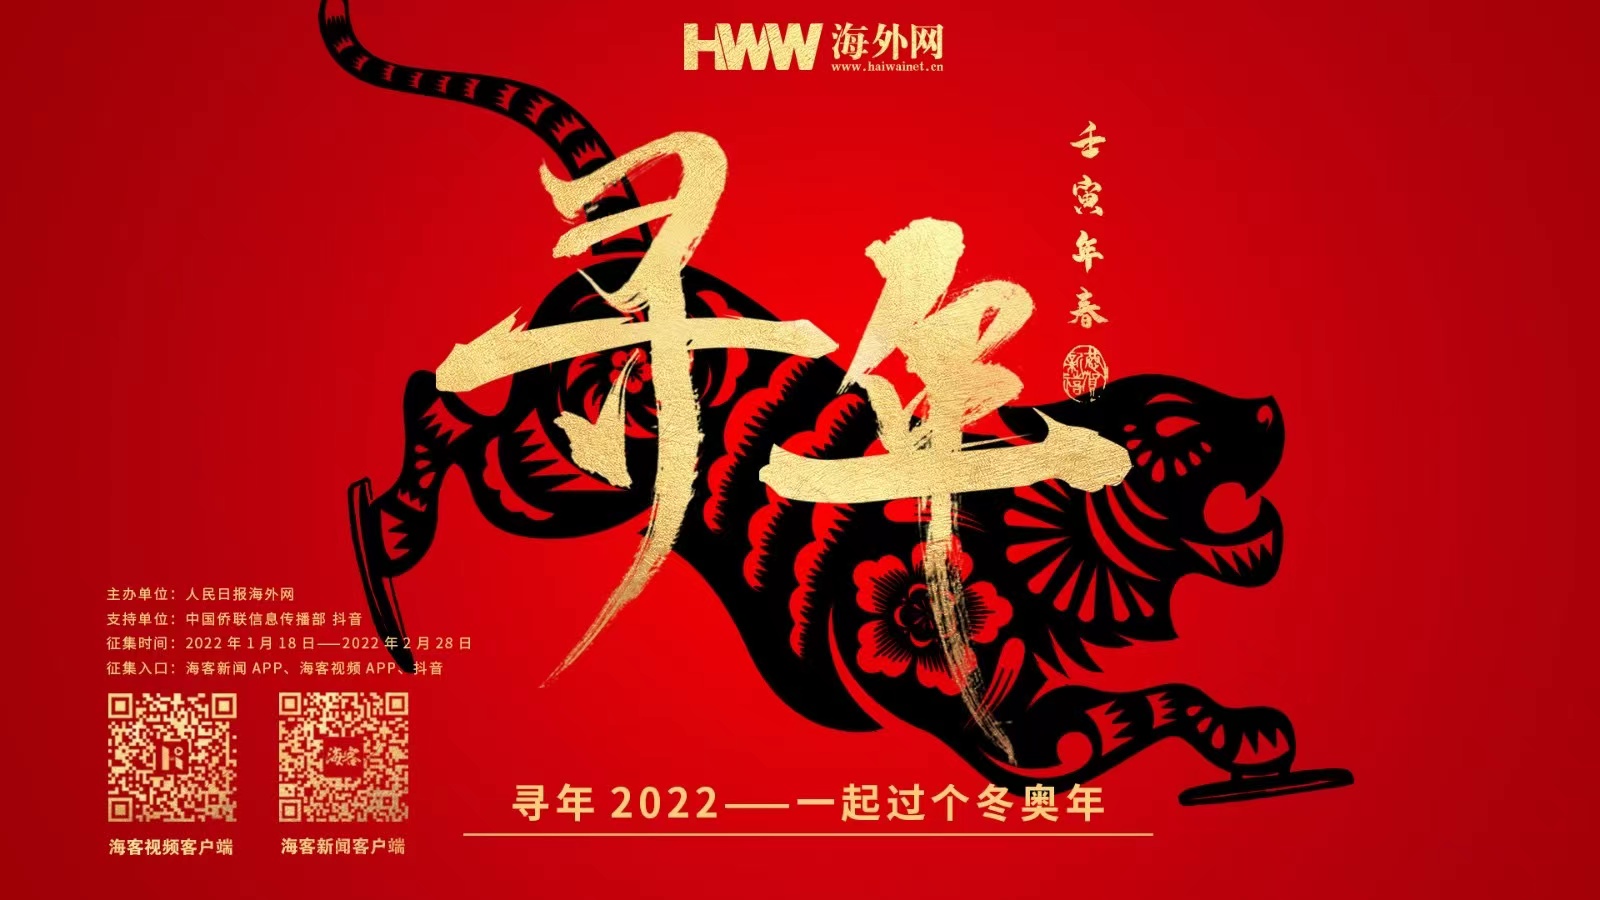 HWW海外网寻年2022-征集活动开启